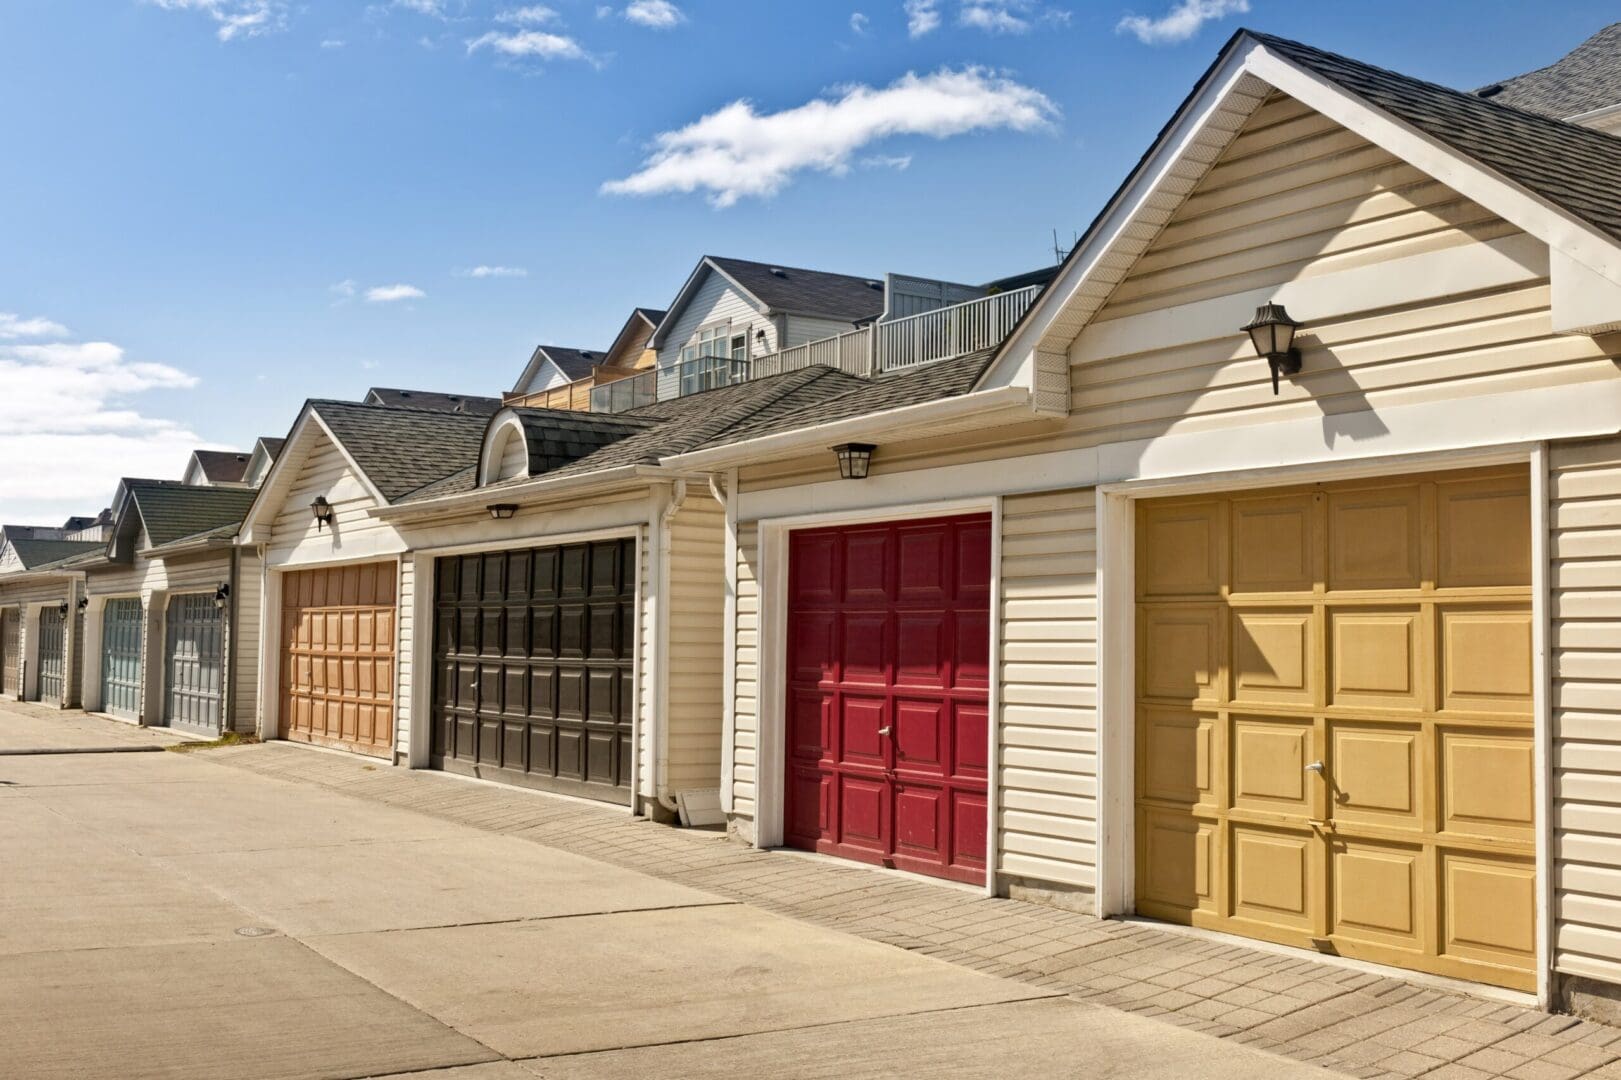 rows of garage doors in different colors